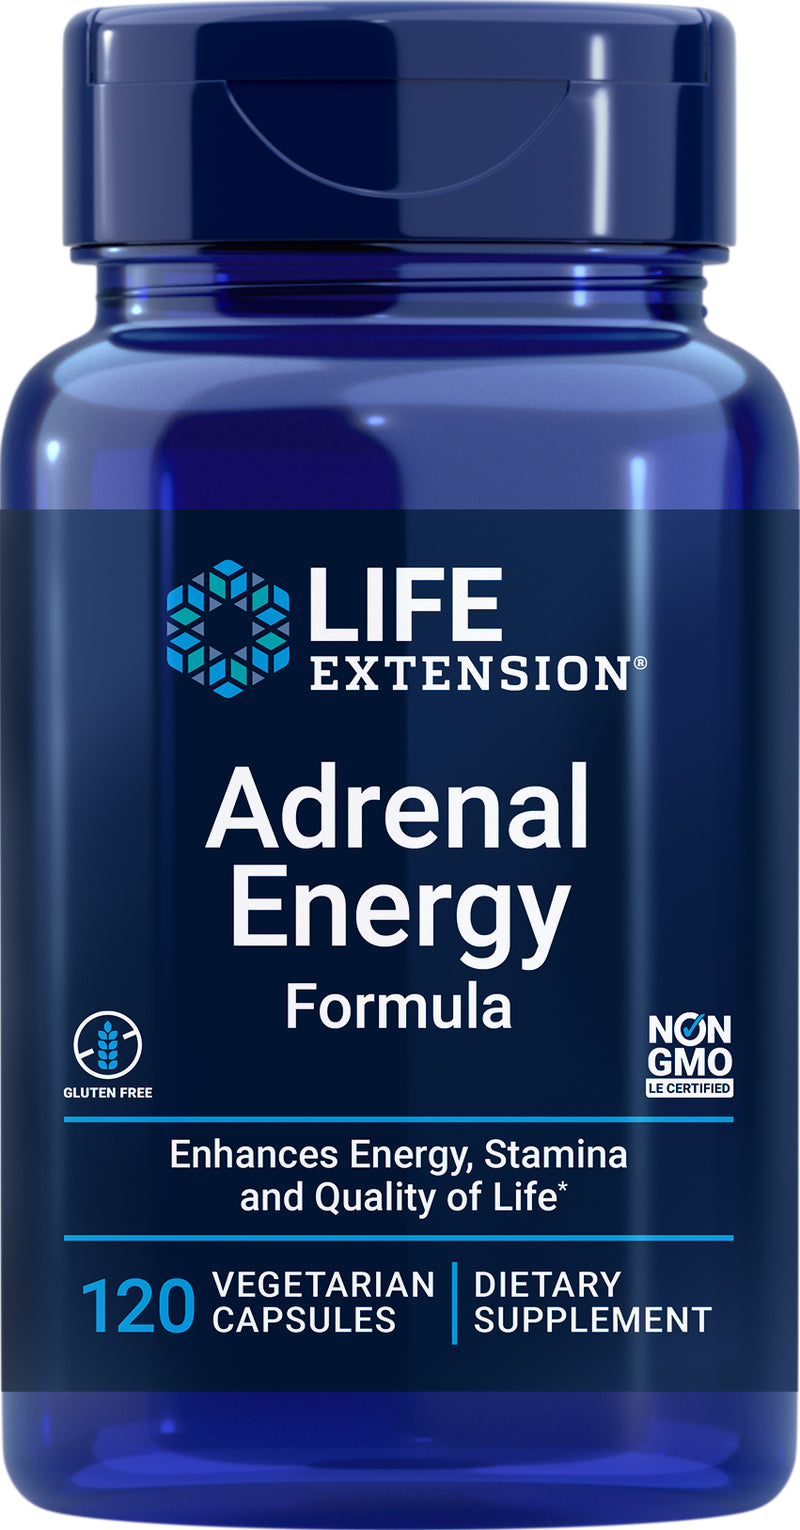 Adrenal Energy Formula 120 veg caps by Life Extension